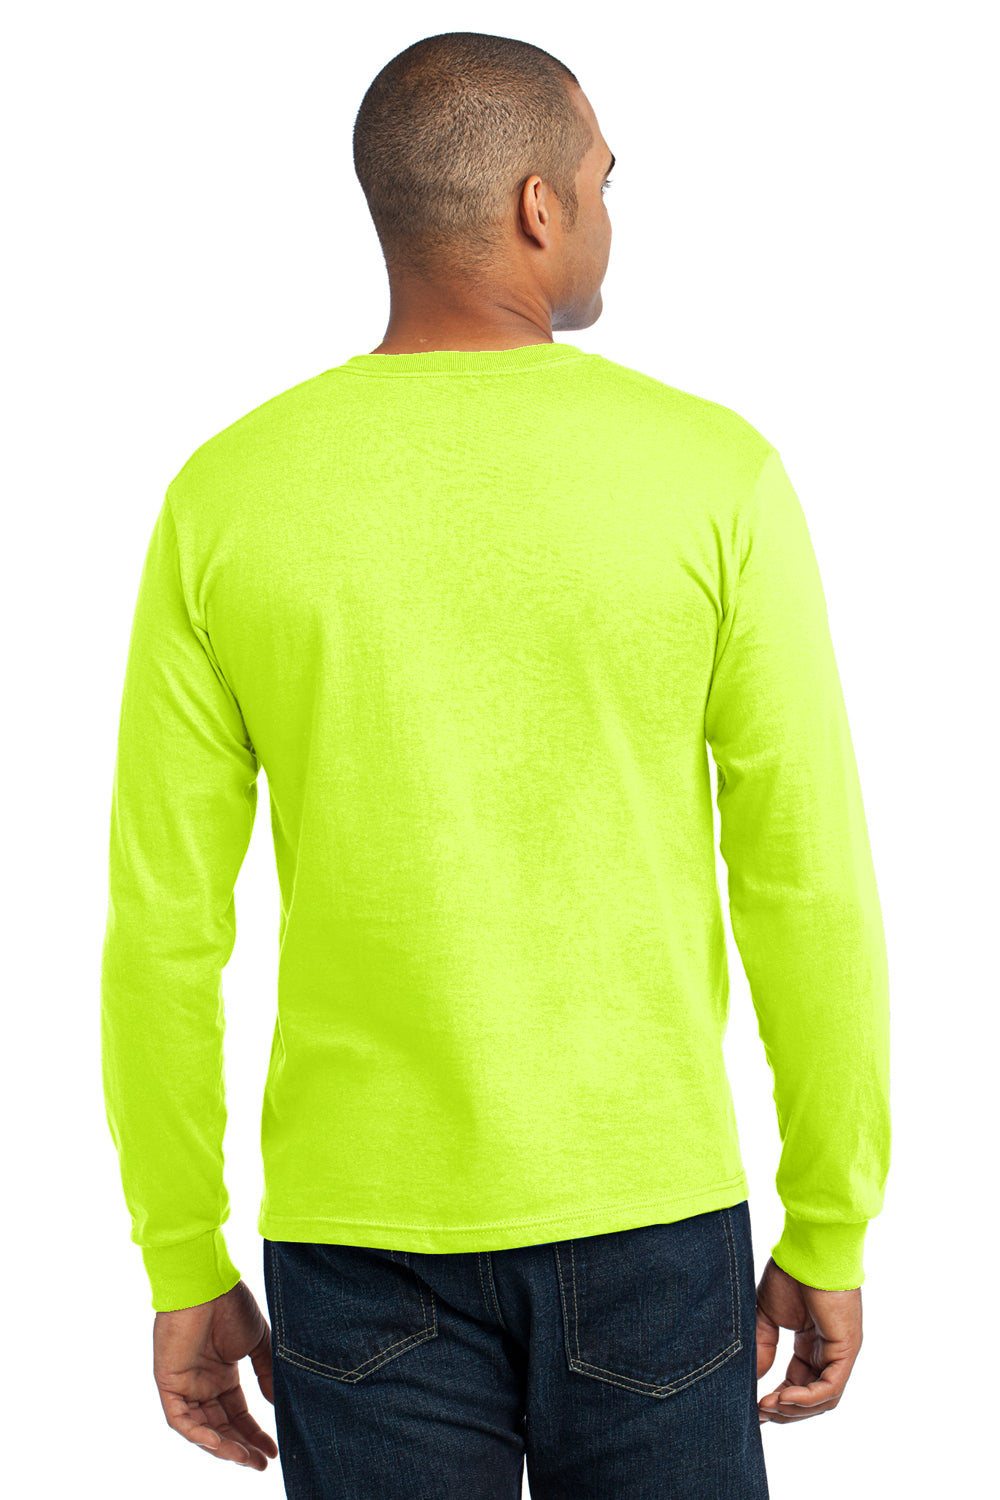 Port & Company USA100LS Mens USA Made Long Sleeve Crewneck T-Shirt Safety Green Back